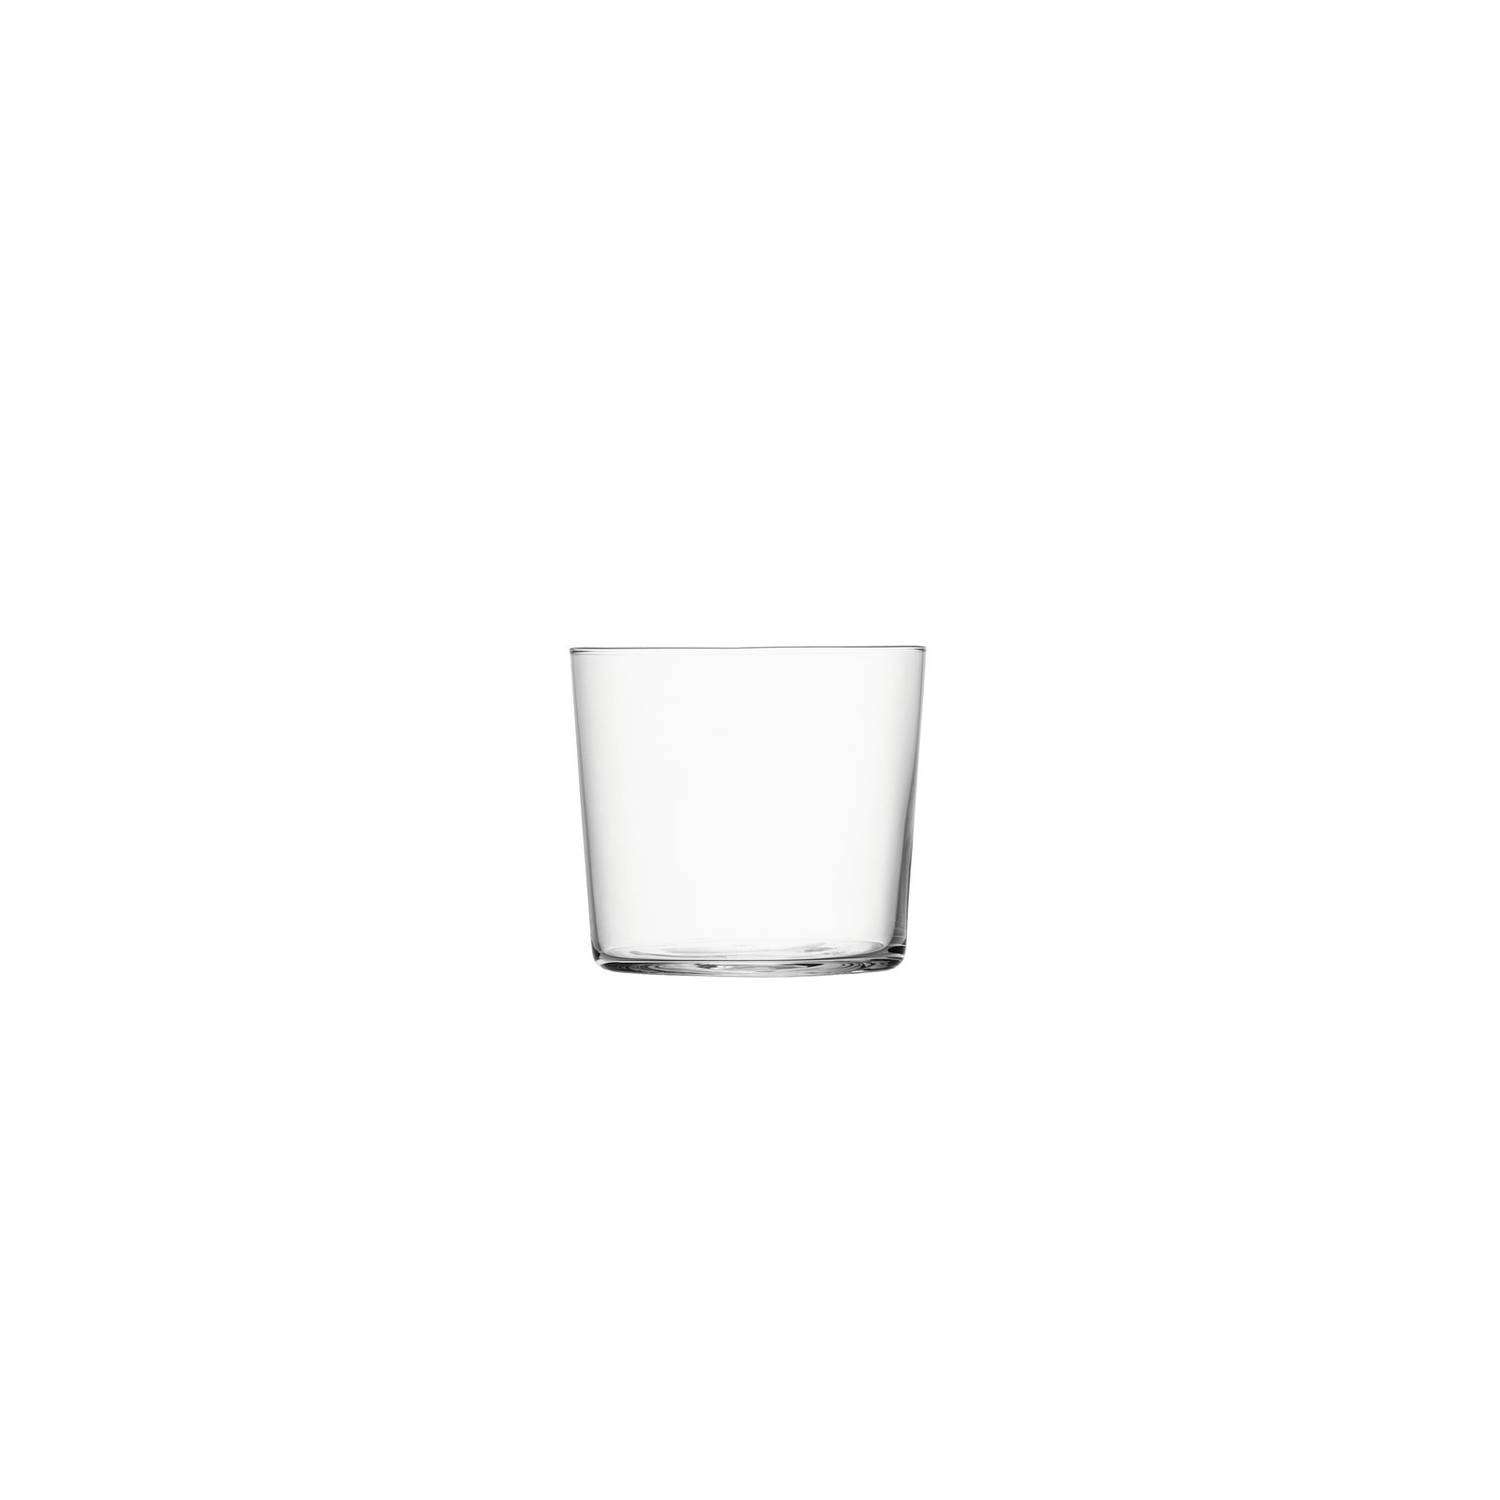 L.S.A. - Gio Waterglas Laag 310 ml - Transparant